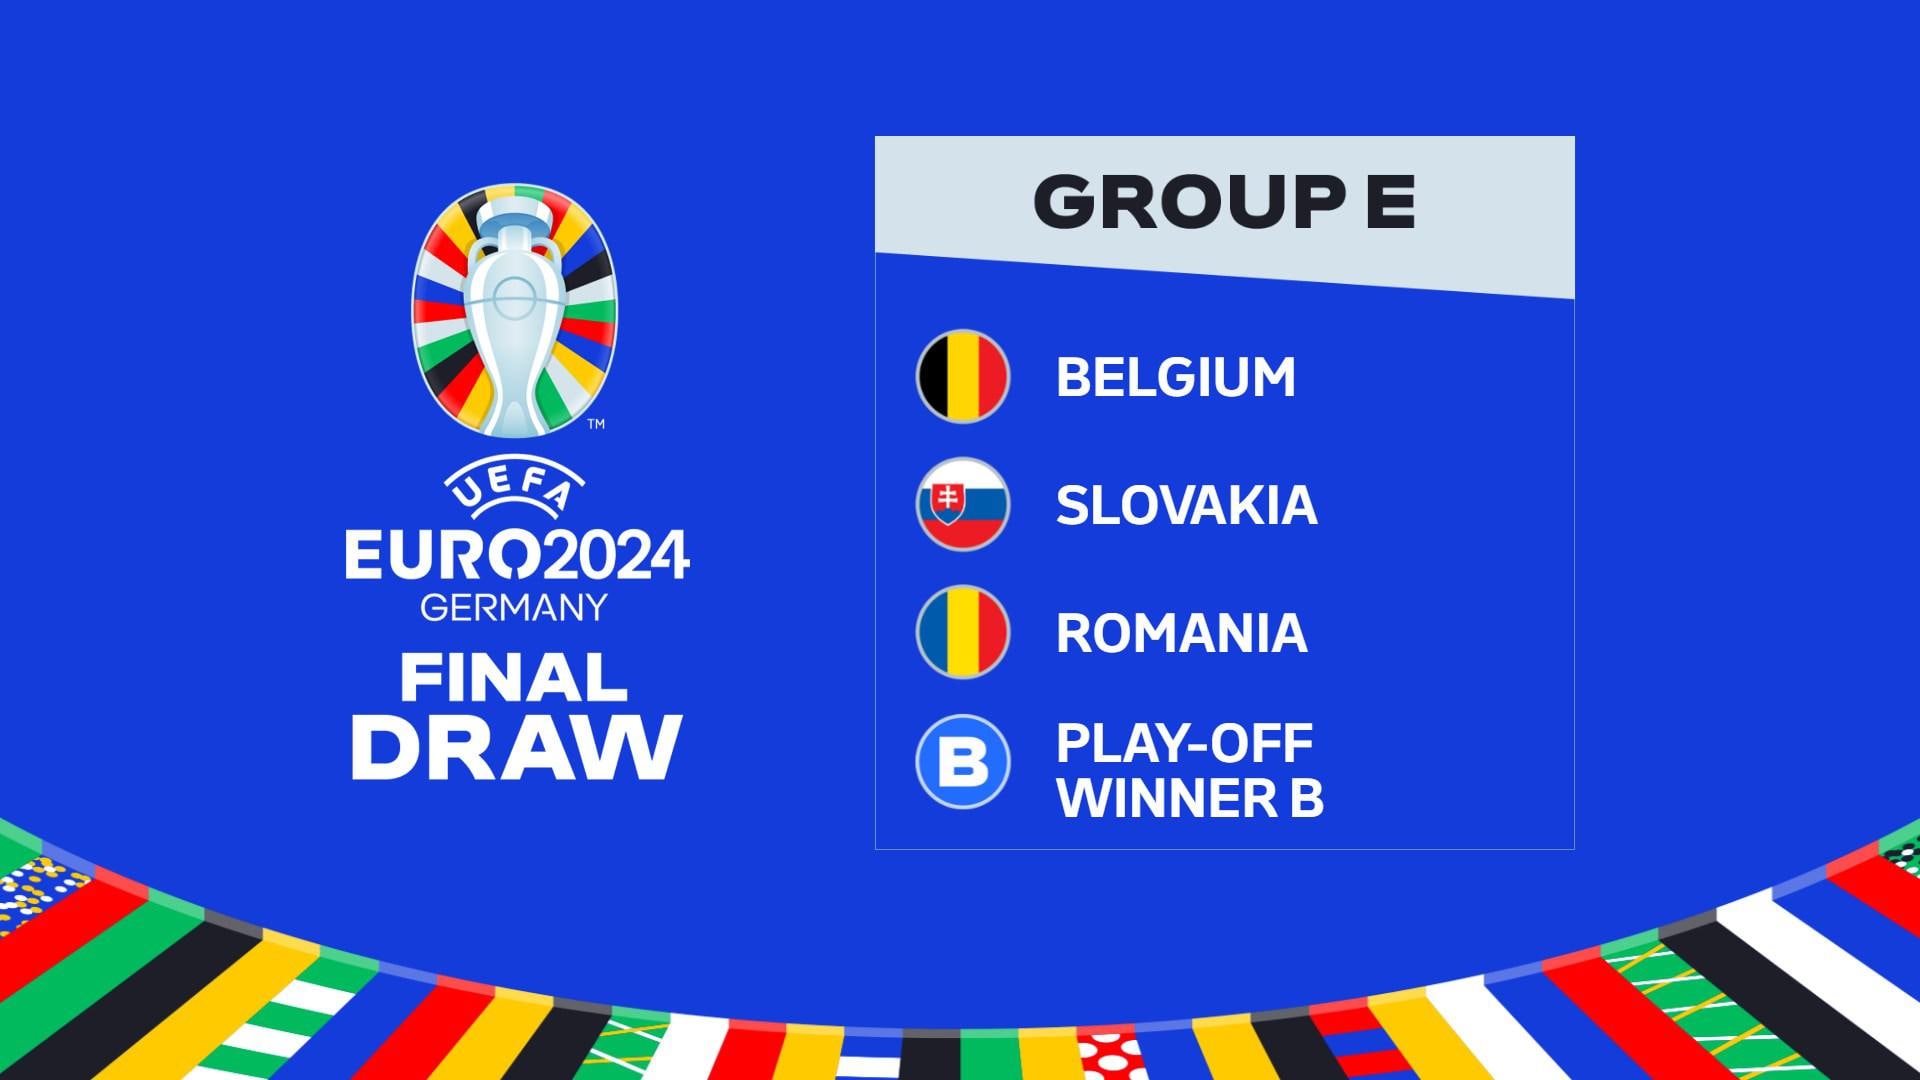 Photo of UEFA EURO 2024 skupina E: Belgicko, Slovensko, Rumunsko, víťaz play-off B |  UEFA Euro 2024